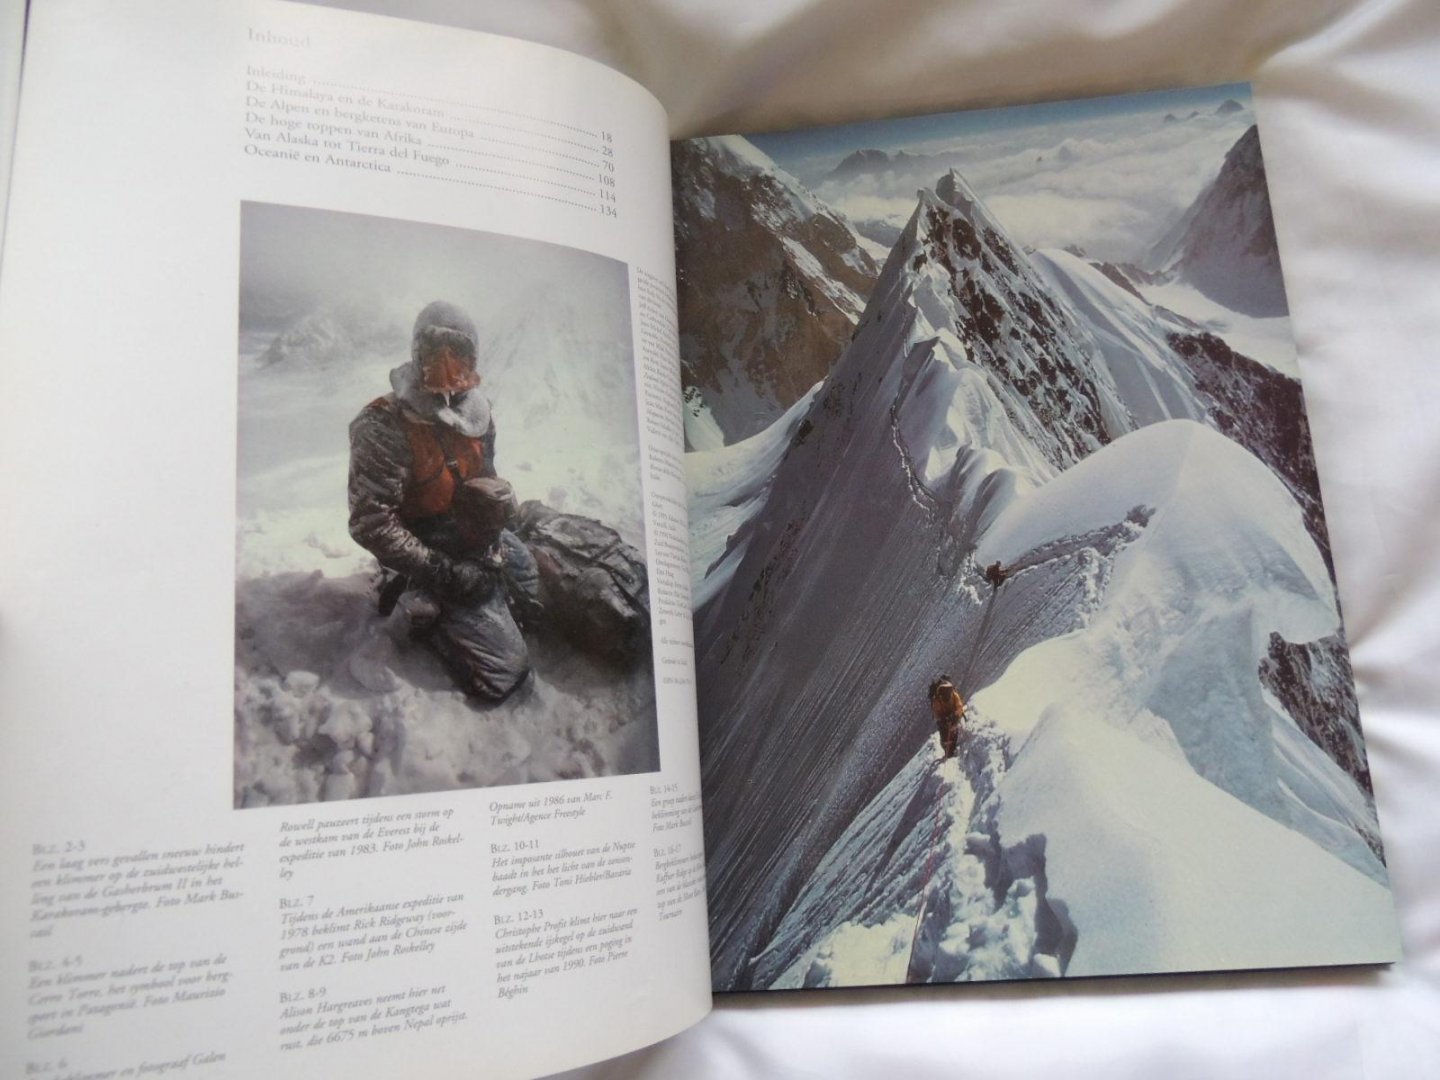 Ardito, Stefano - Stefano Ardito; René Nabbe; Elke Doelman - Bergbeklimmen. De beklimming van 's werelds bekendste bergen